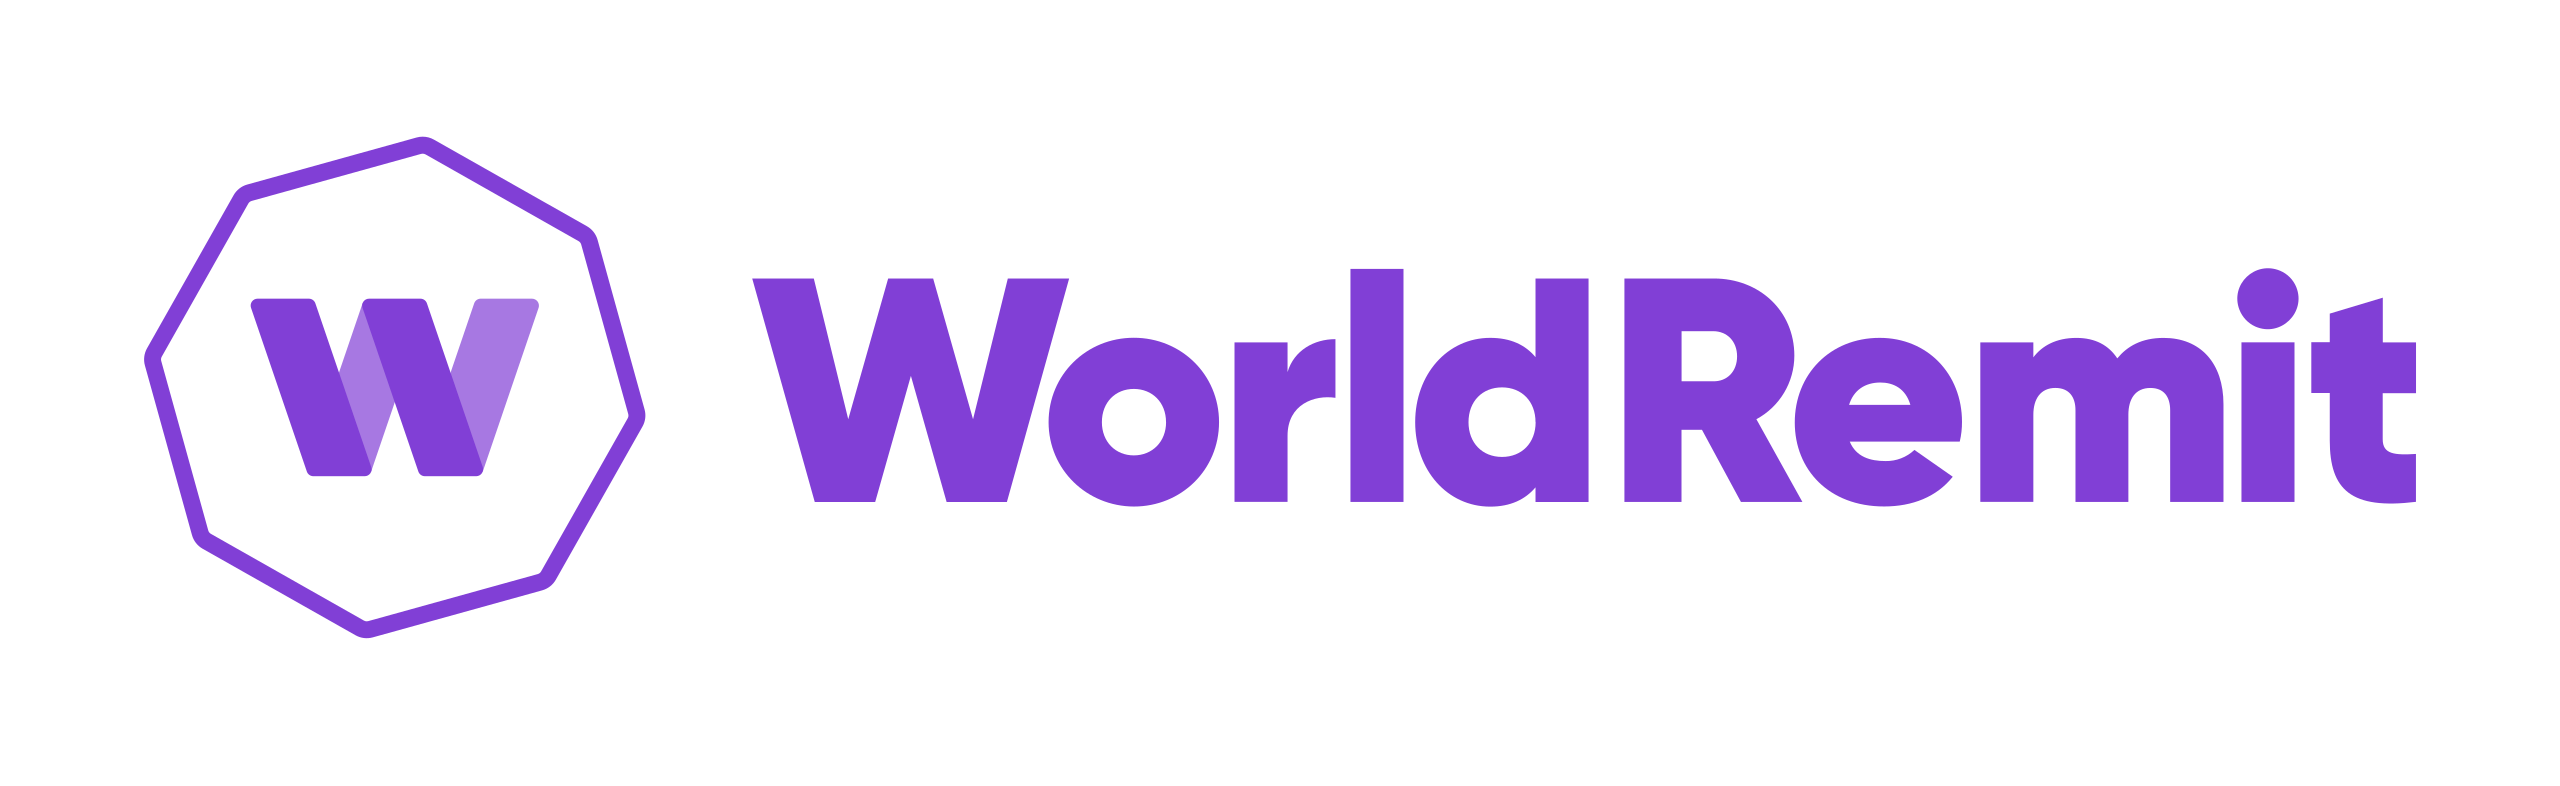 worldremit-logo-bitmap